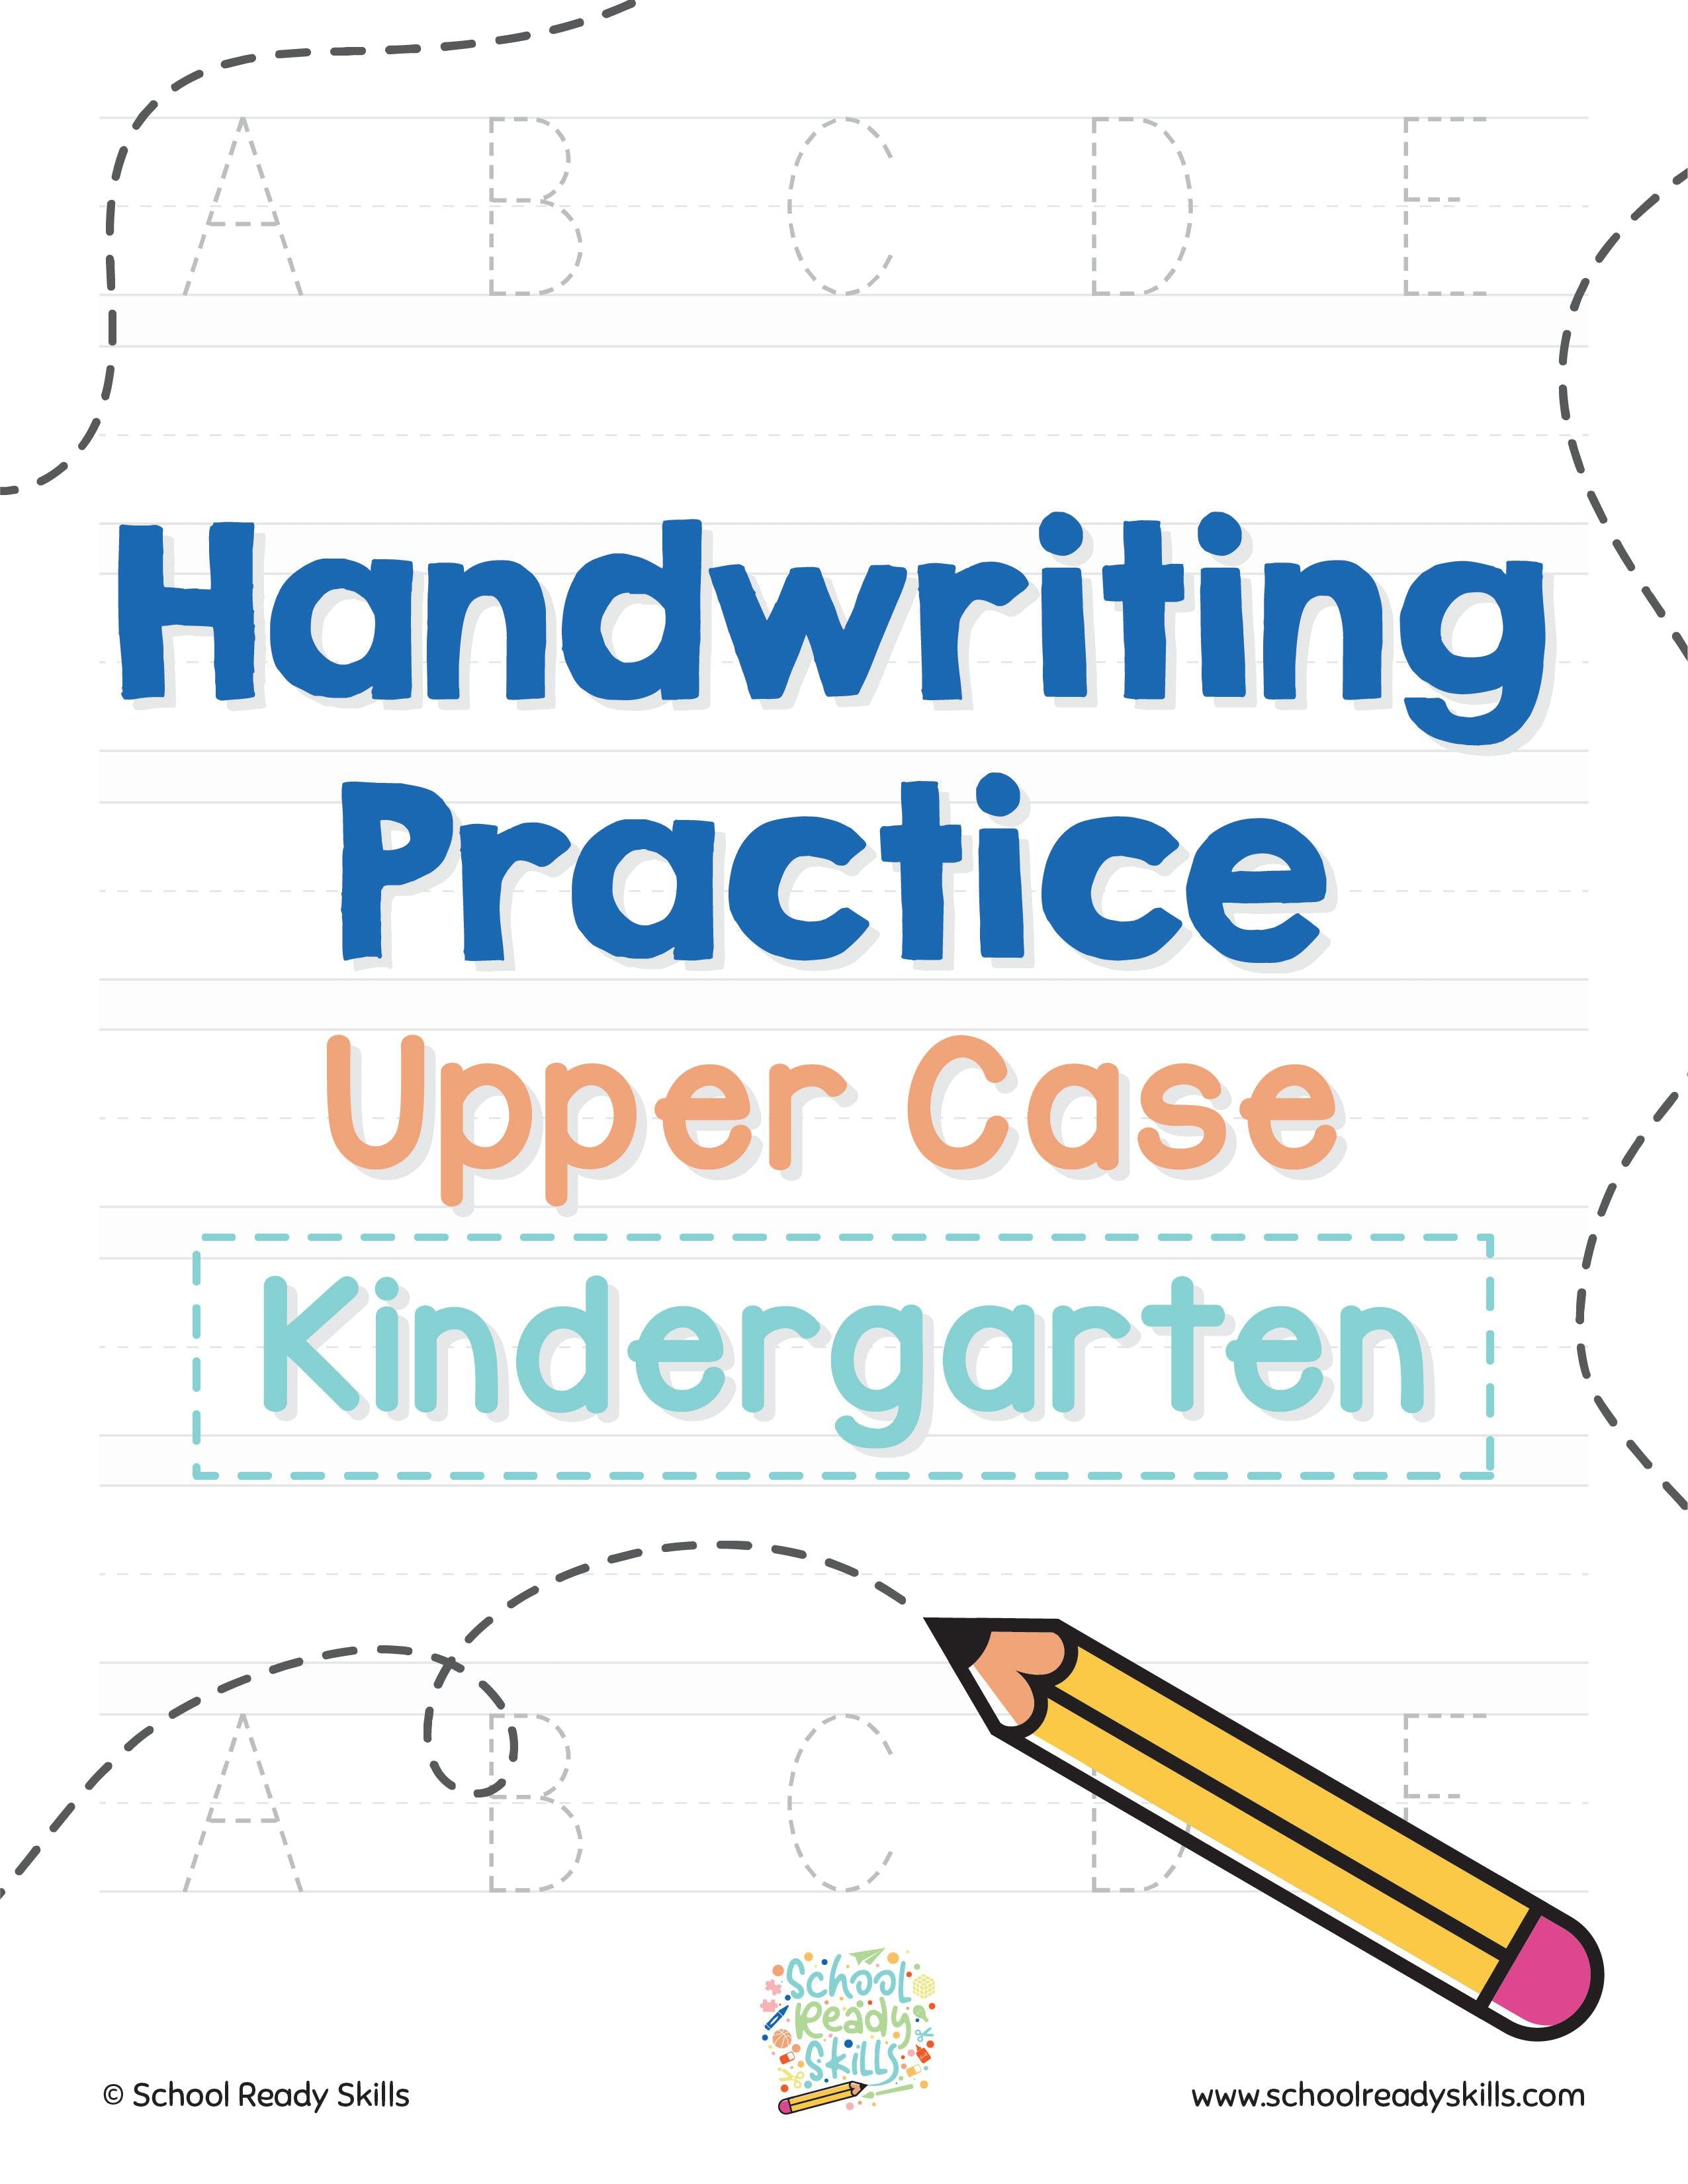 Get Ready for Kindergarten Bundle: Build Writing Skills